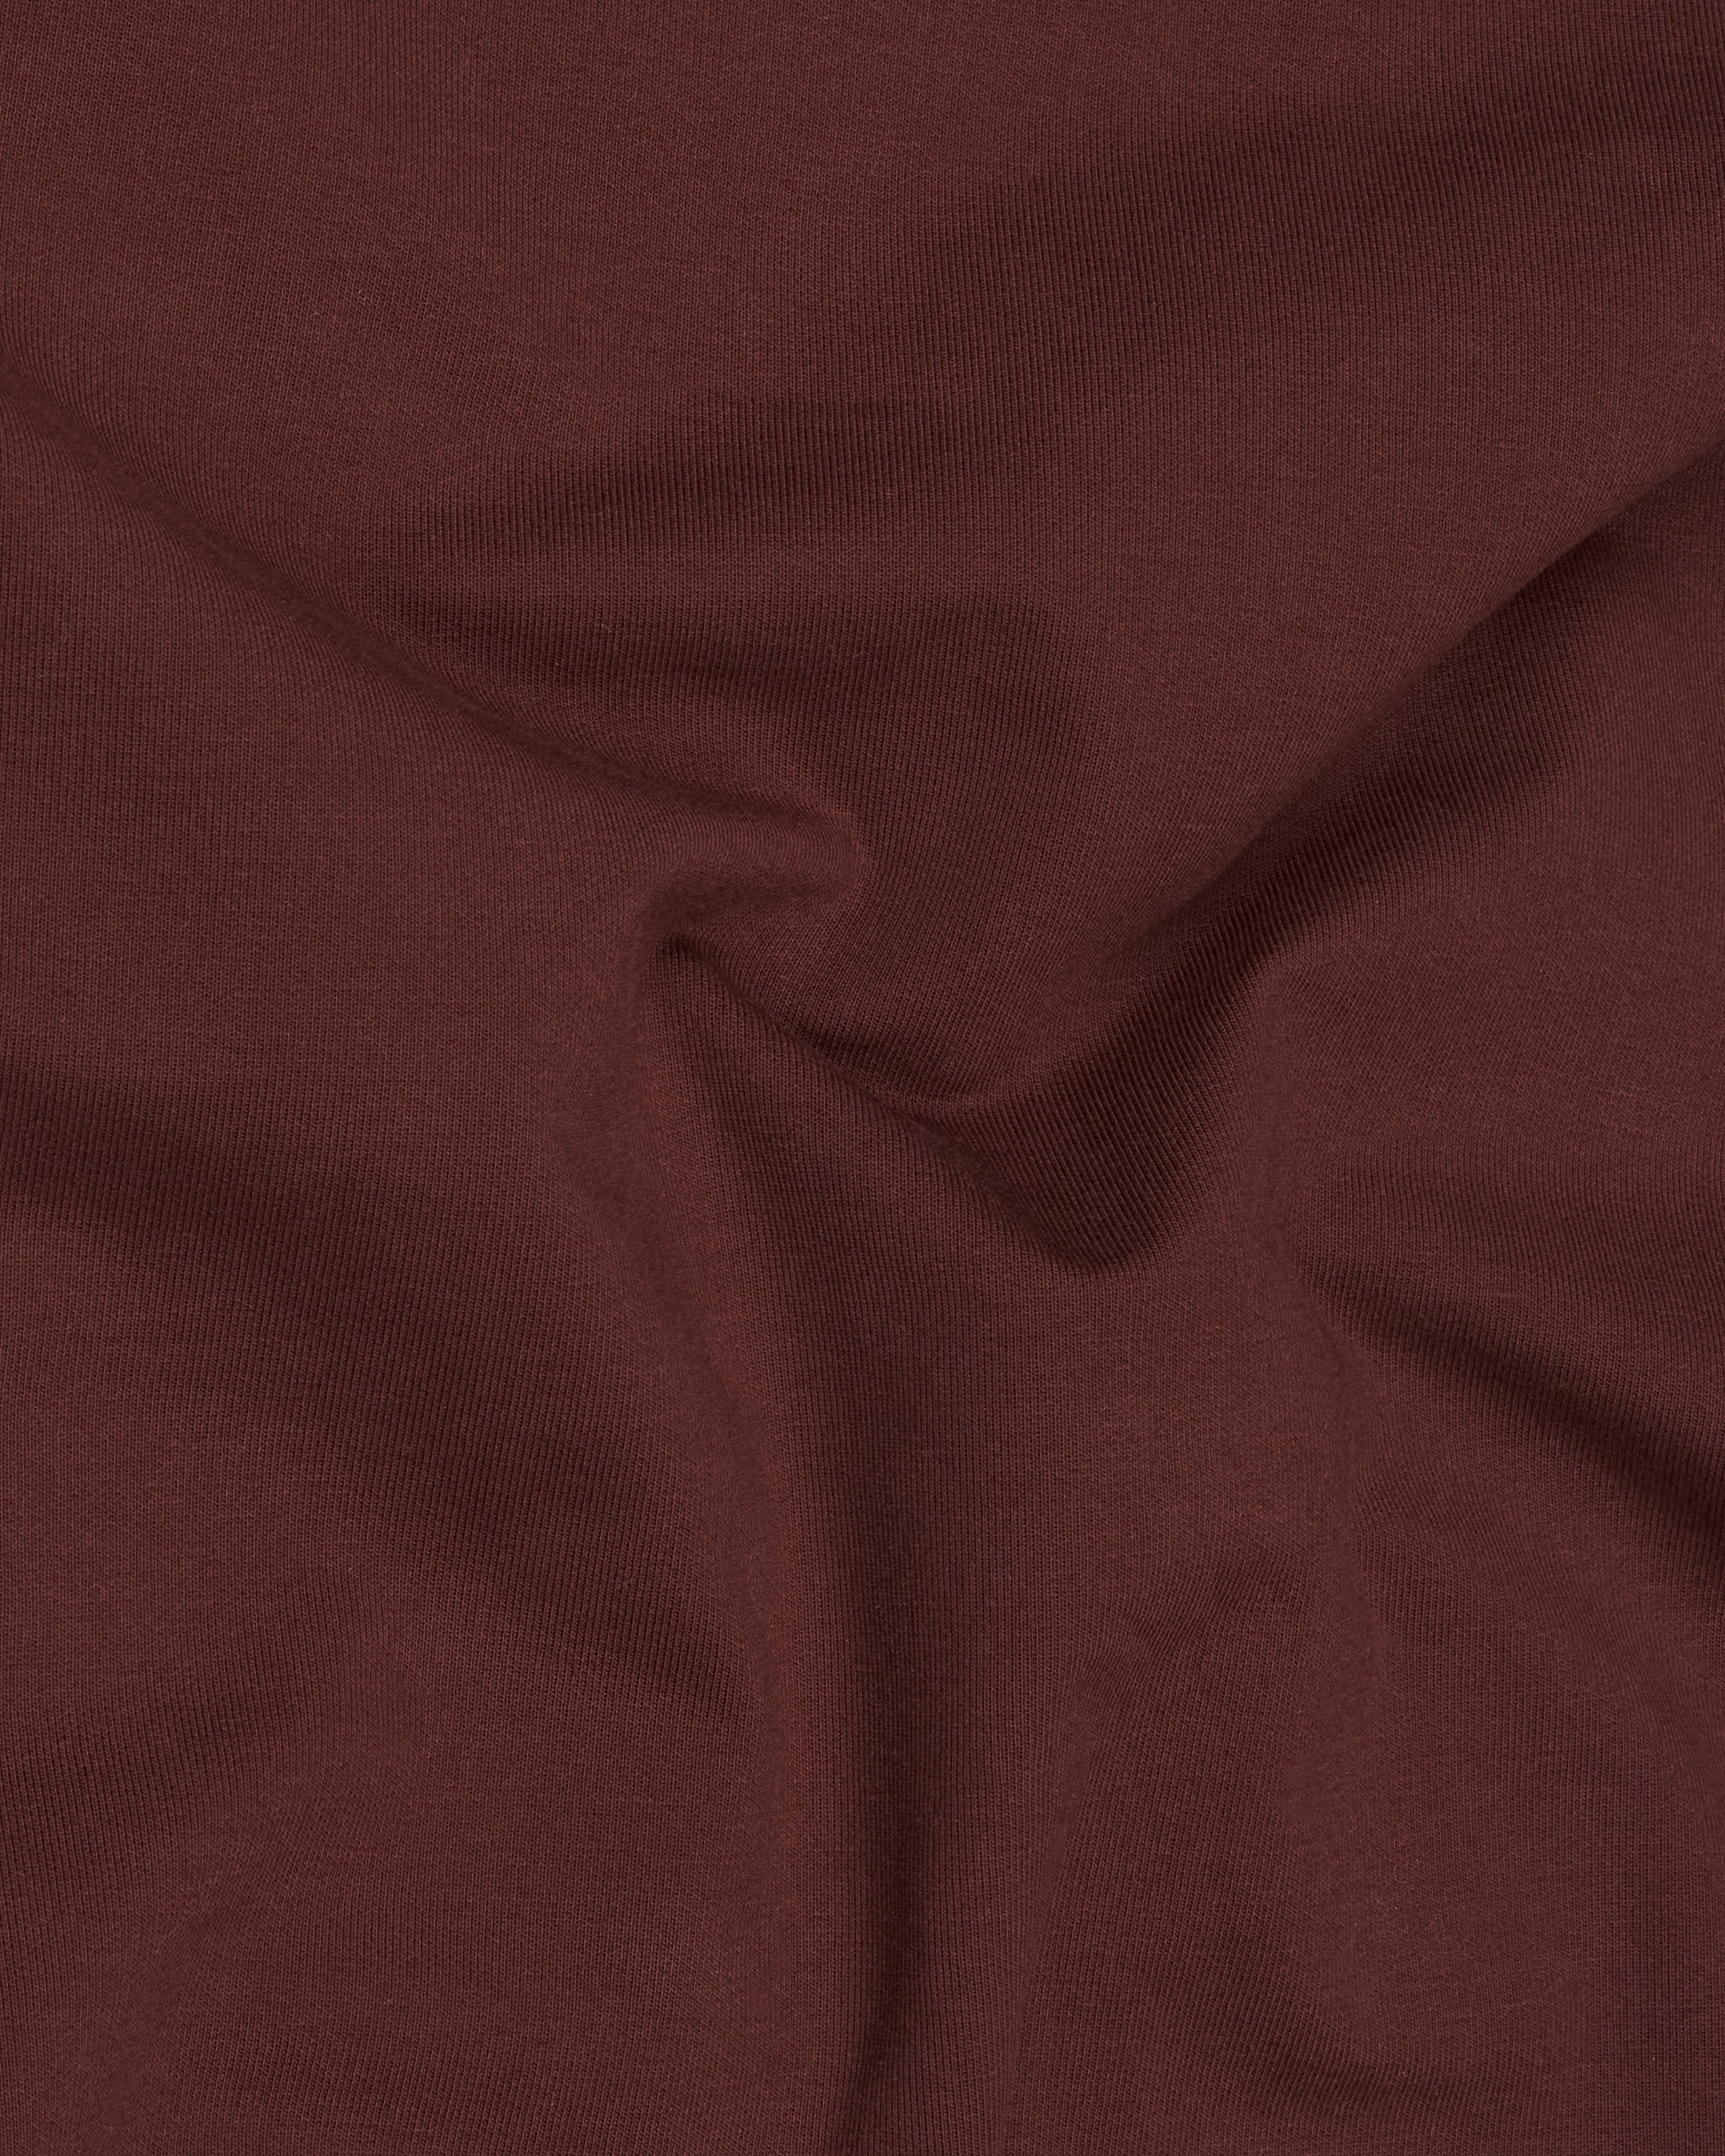 Cocoa Bean Brown Tiger Embroidered Premium cotton Sweatshirt TS058-W02-S, TS058-W02-M, TS058-W02-L, TS058-W02-XL, TS058-W02-XXL